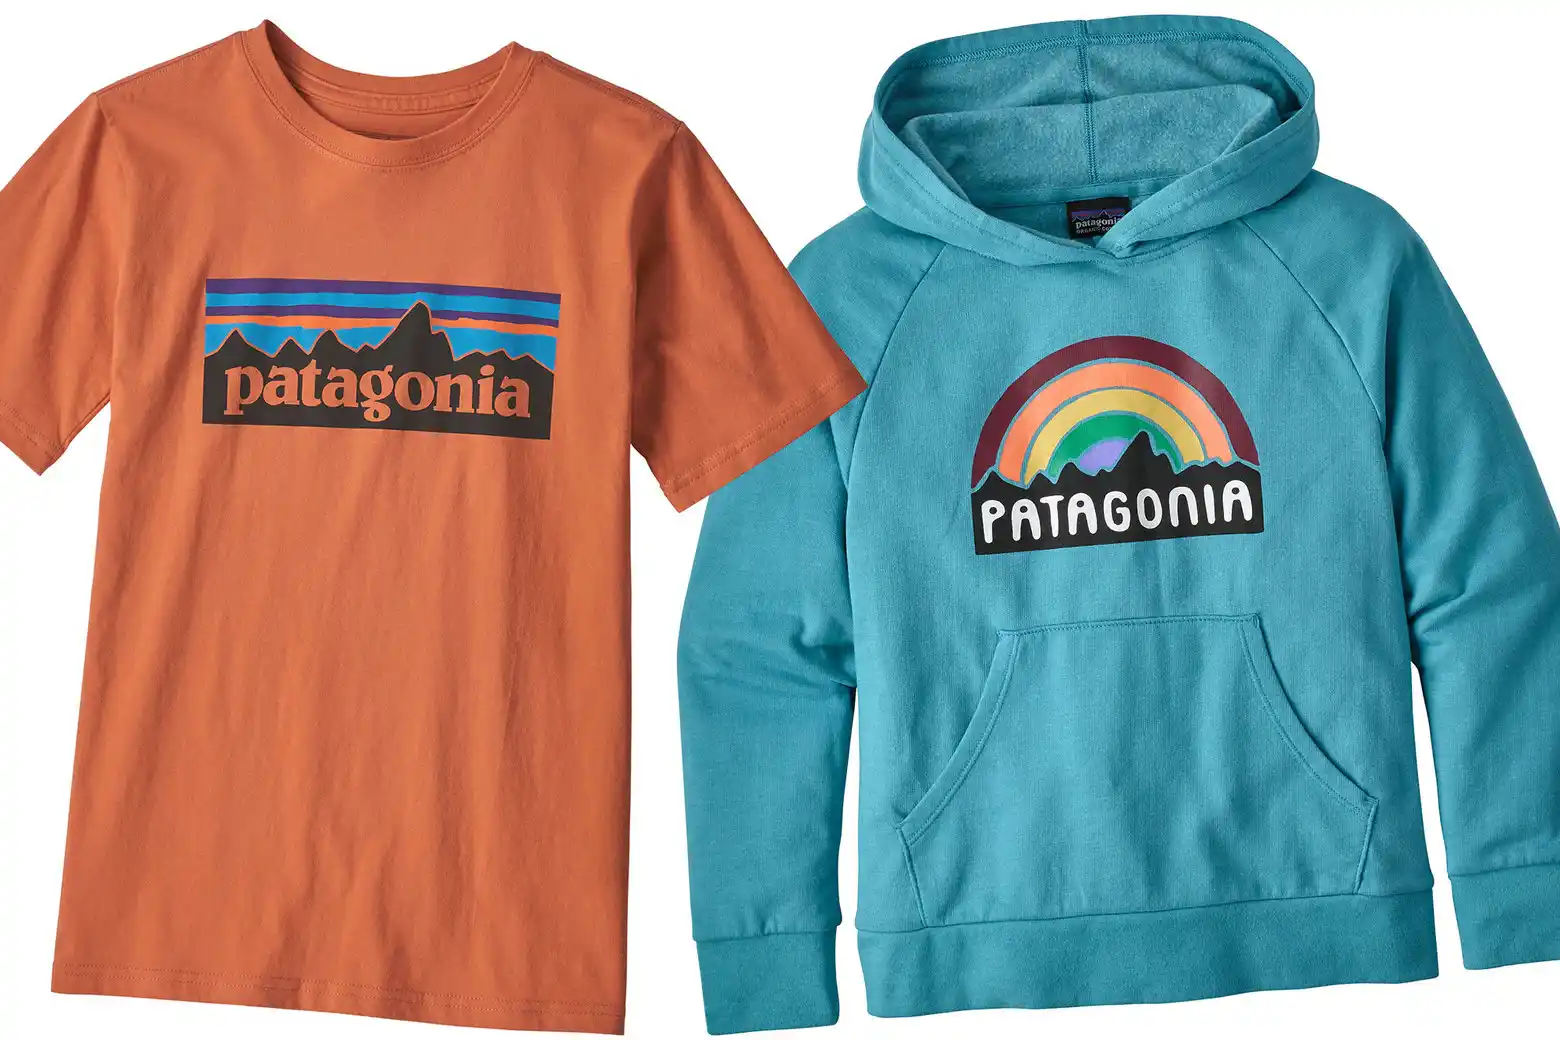 Patagonia | Echo-friendy fashion